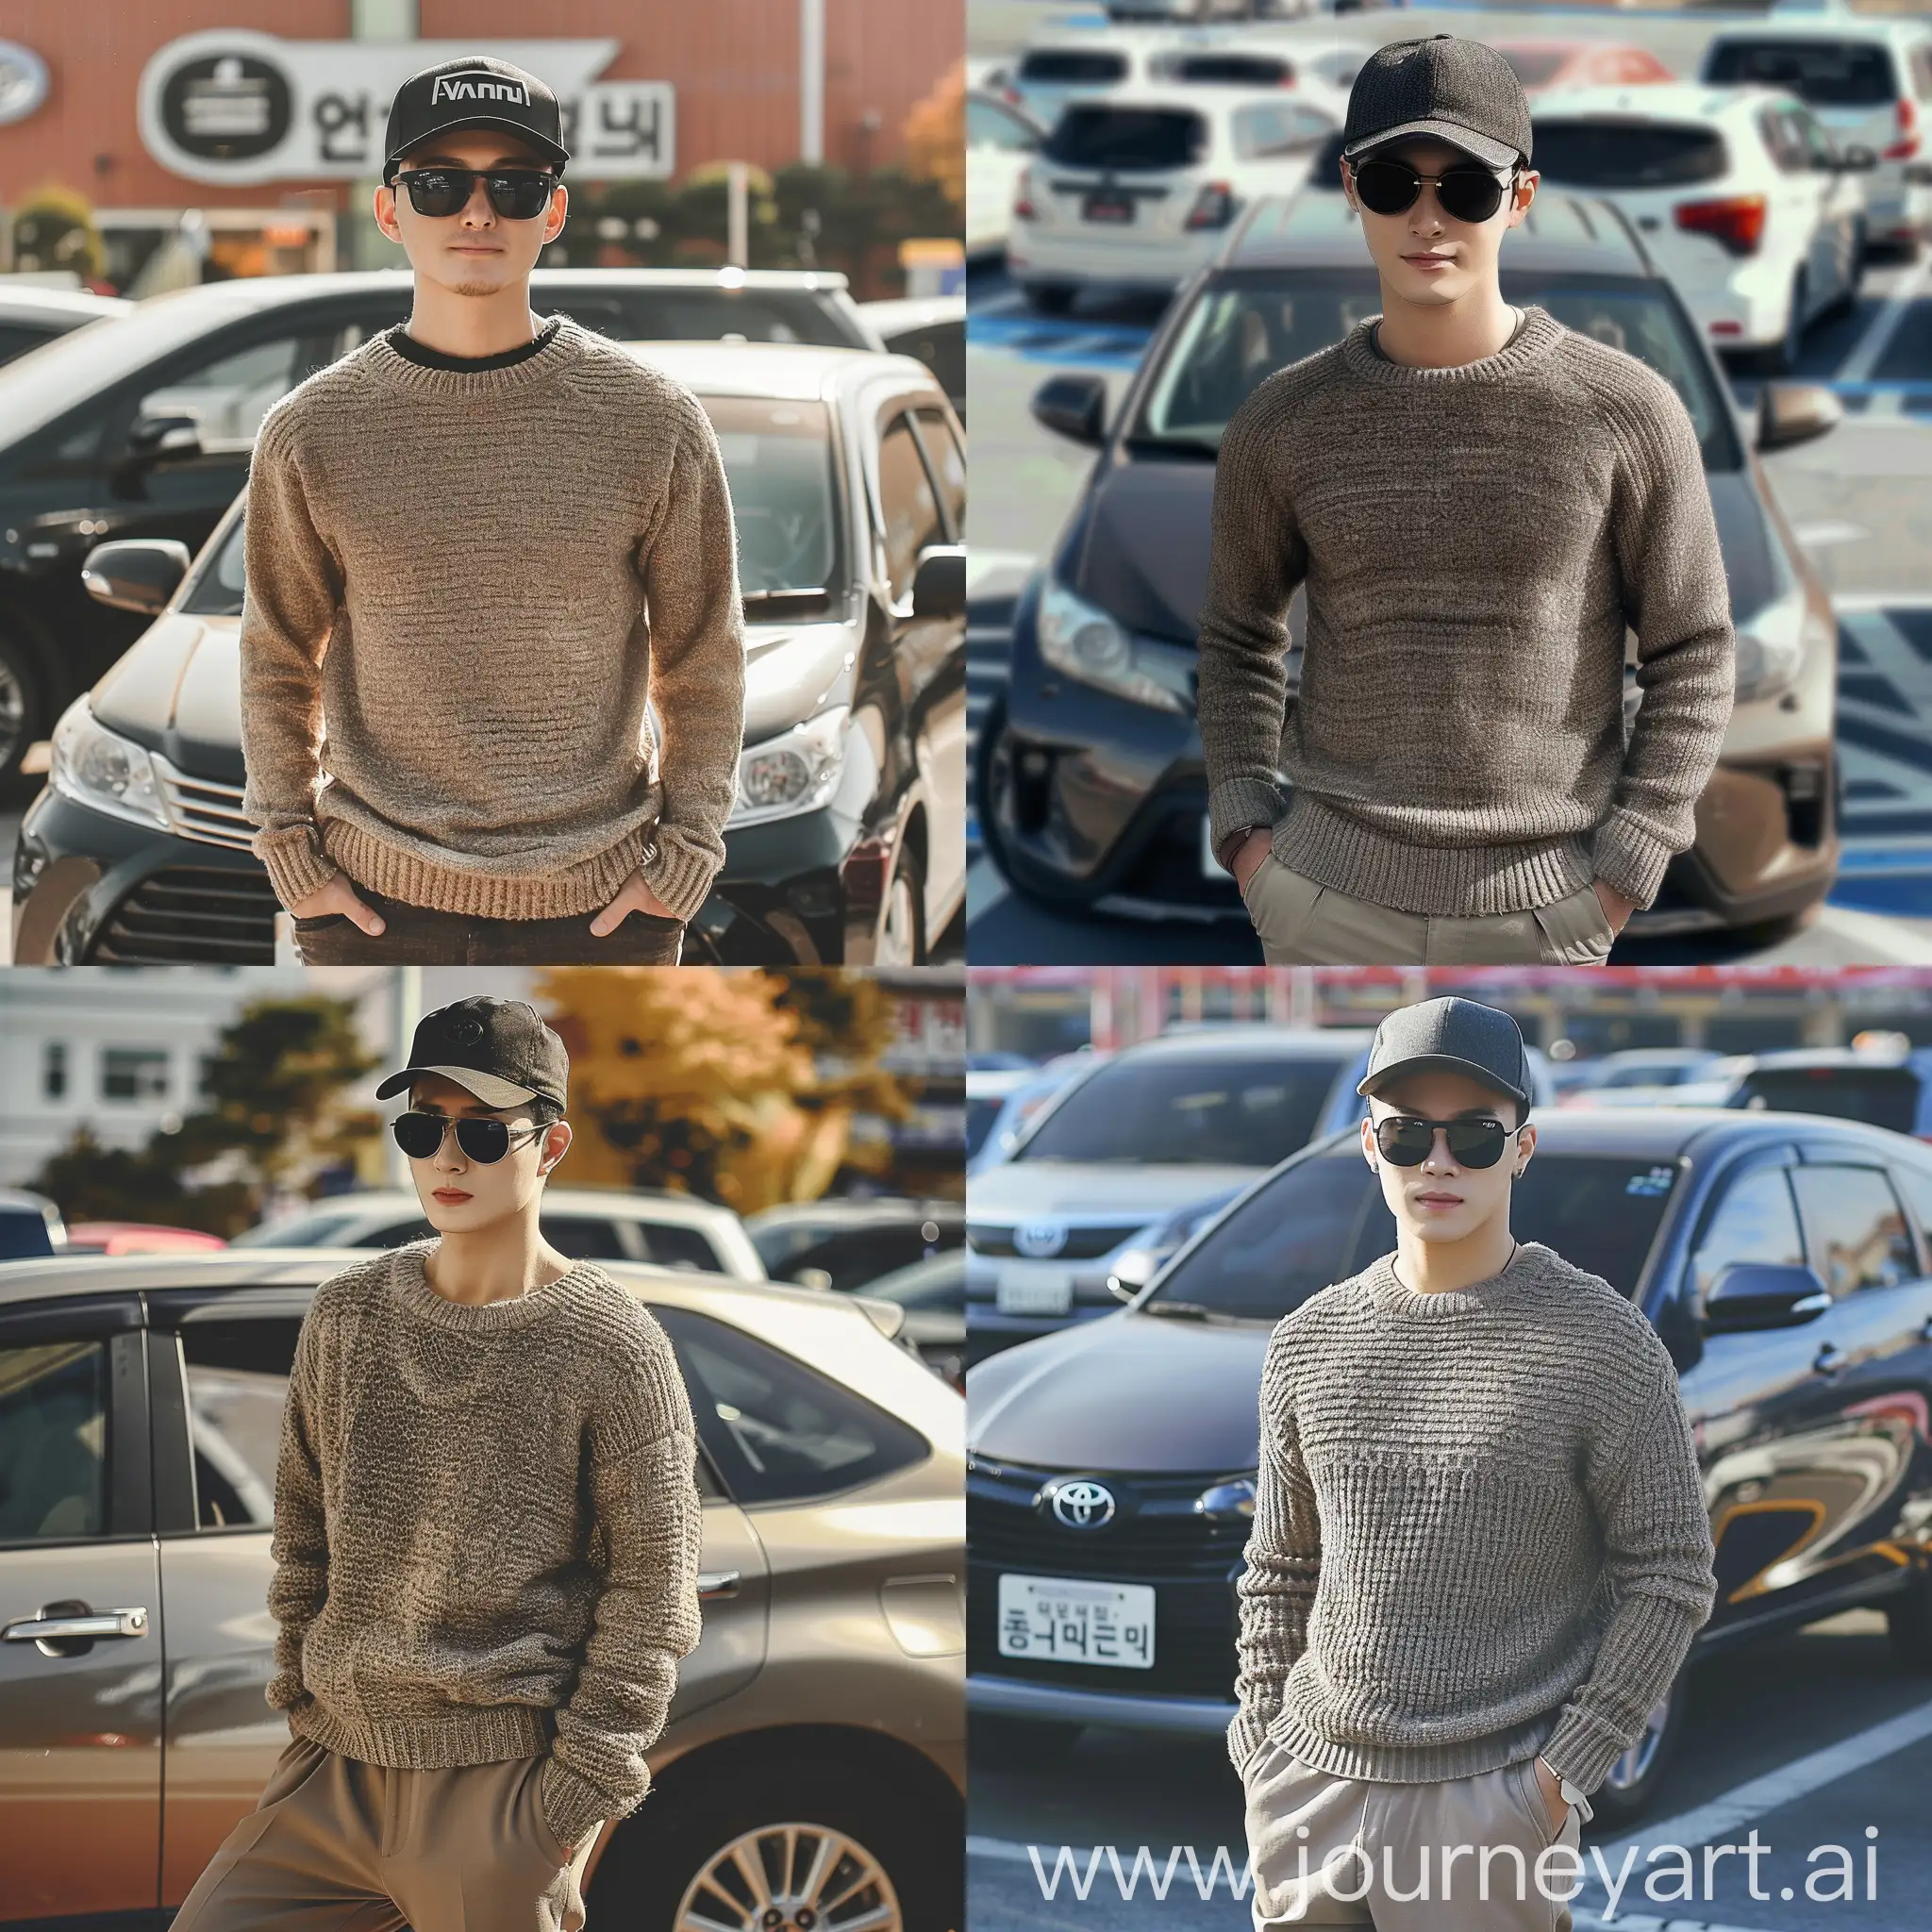 Stylish-Korean-Man-Poses-by-Toyota-Avanza-in-Urban-Parking-Lot